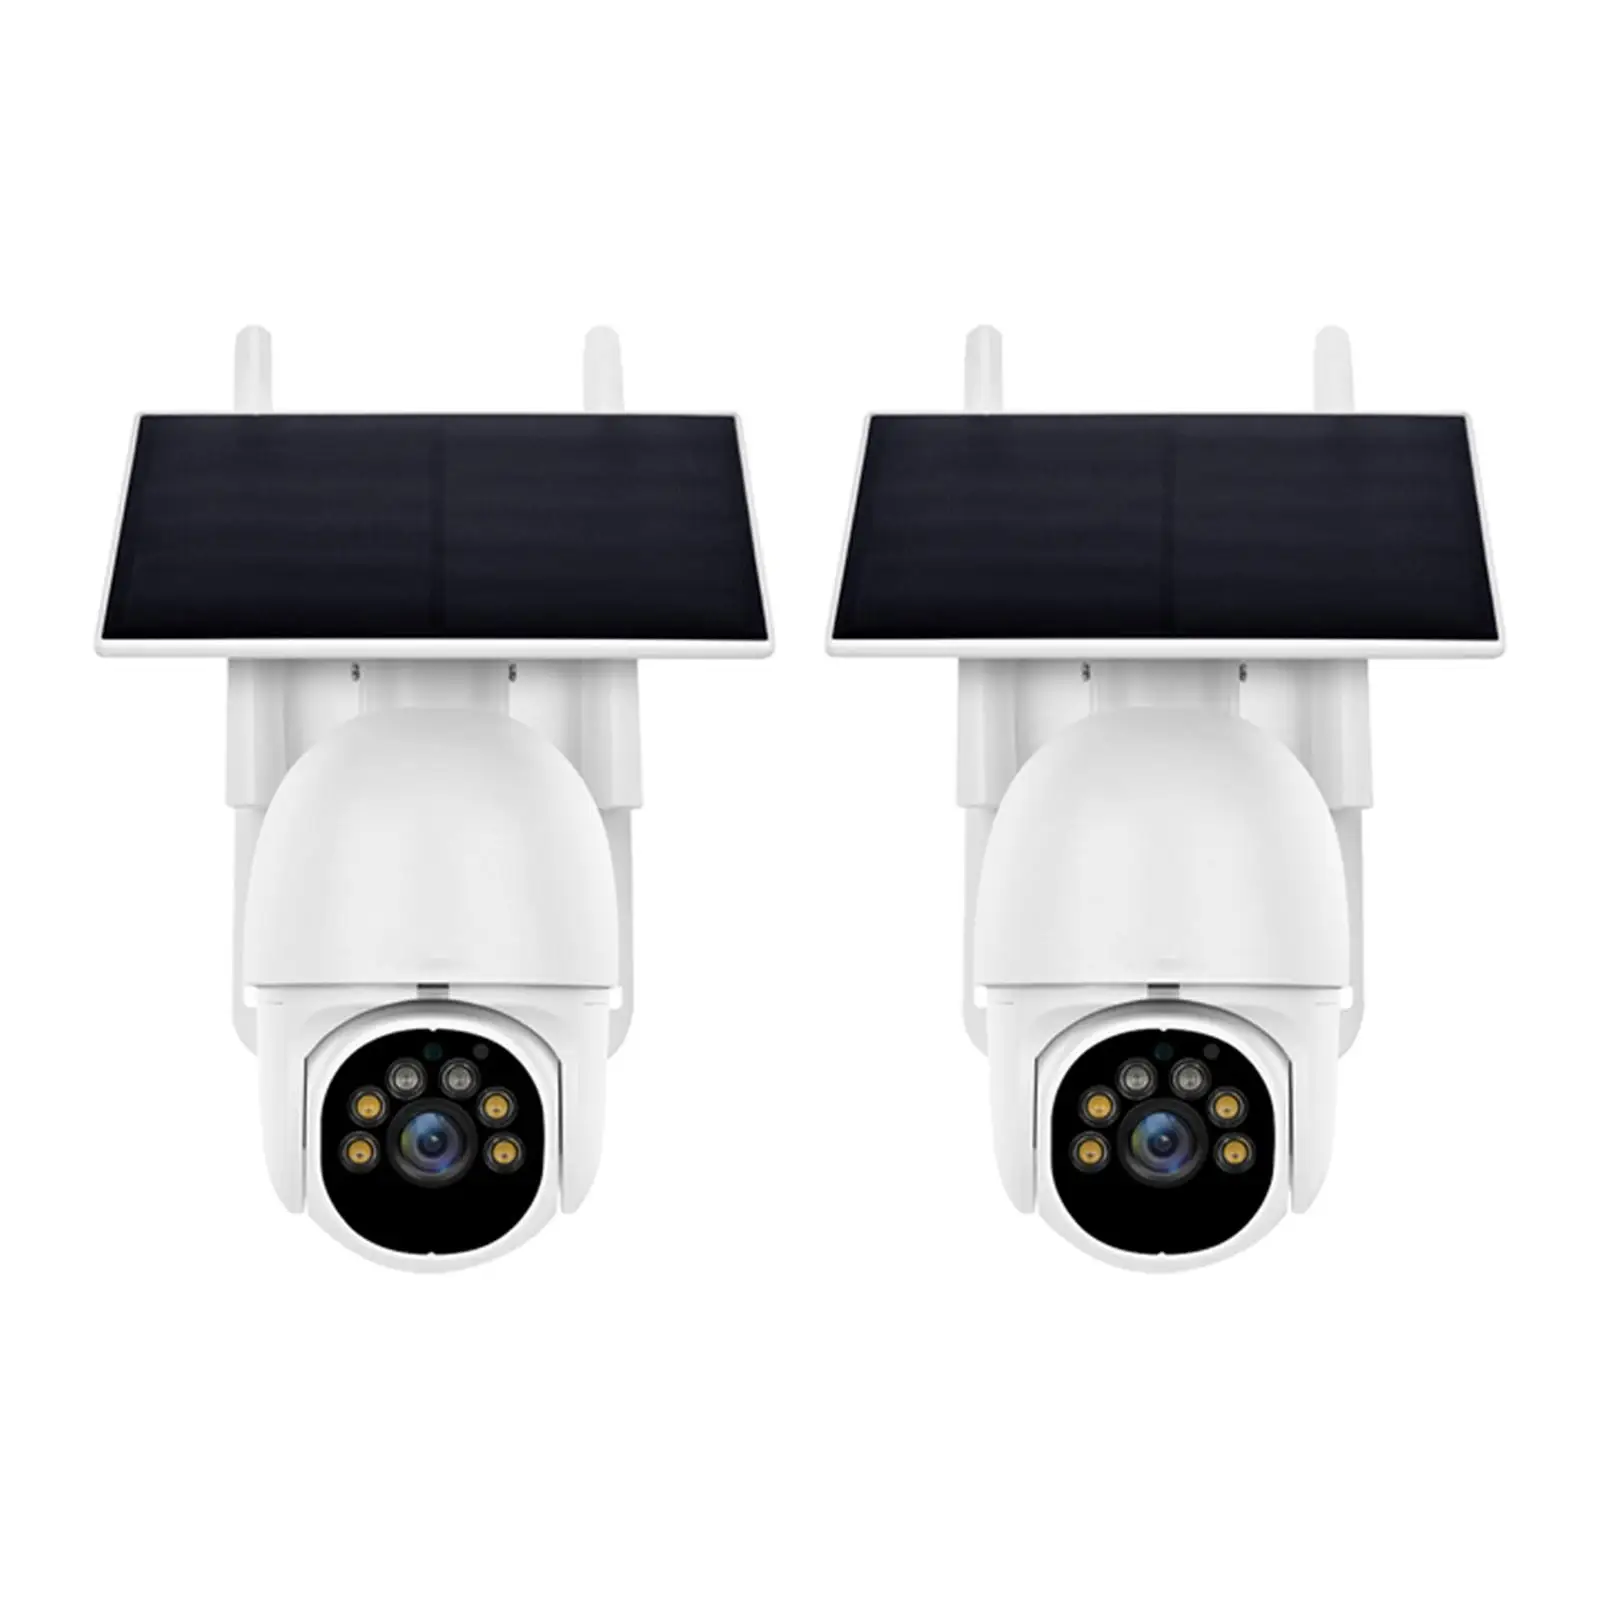 Solar Powered Security Camera Outdoor Color Night Vision Pan Tilt 360° View IP65 Waterproof Cloud/TF Storage Surveillance cam